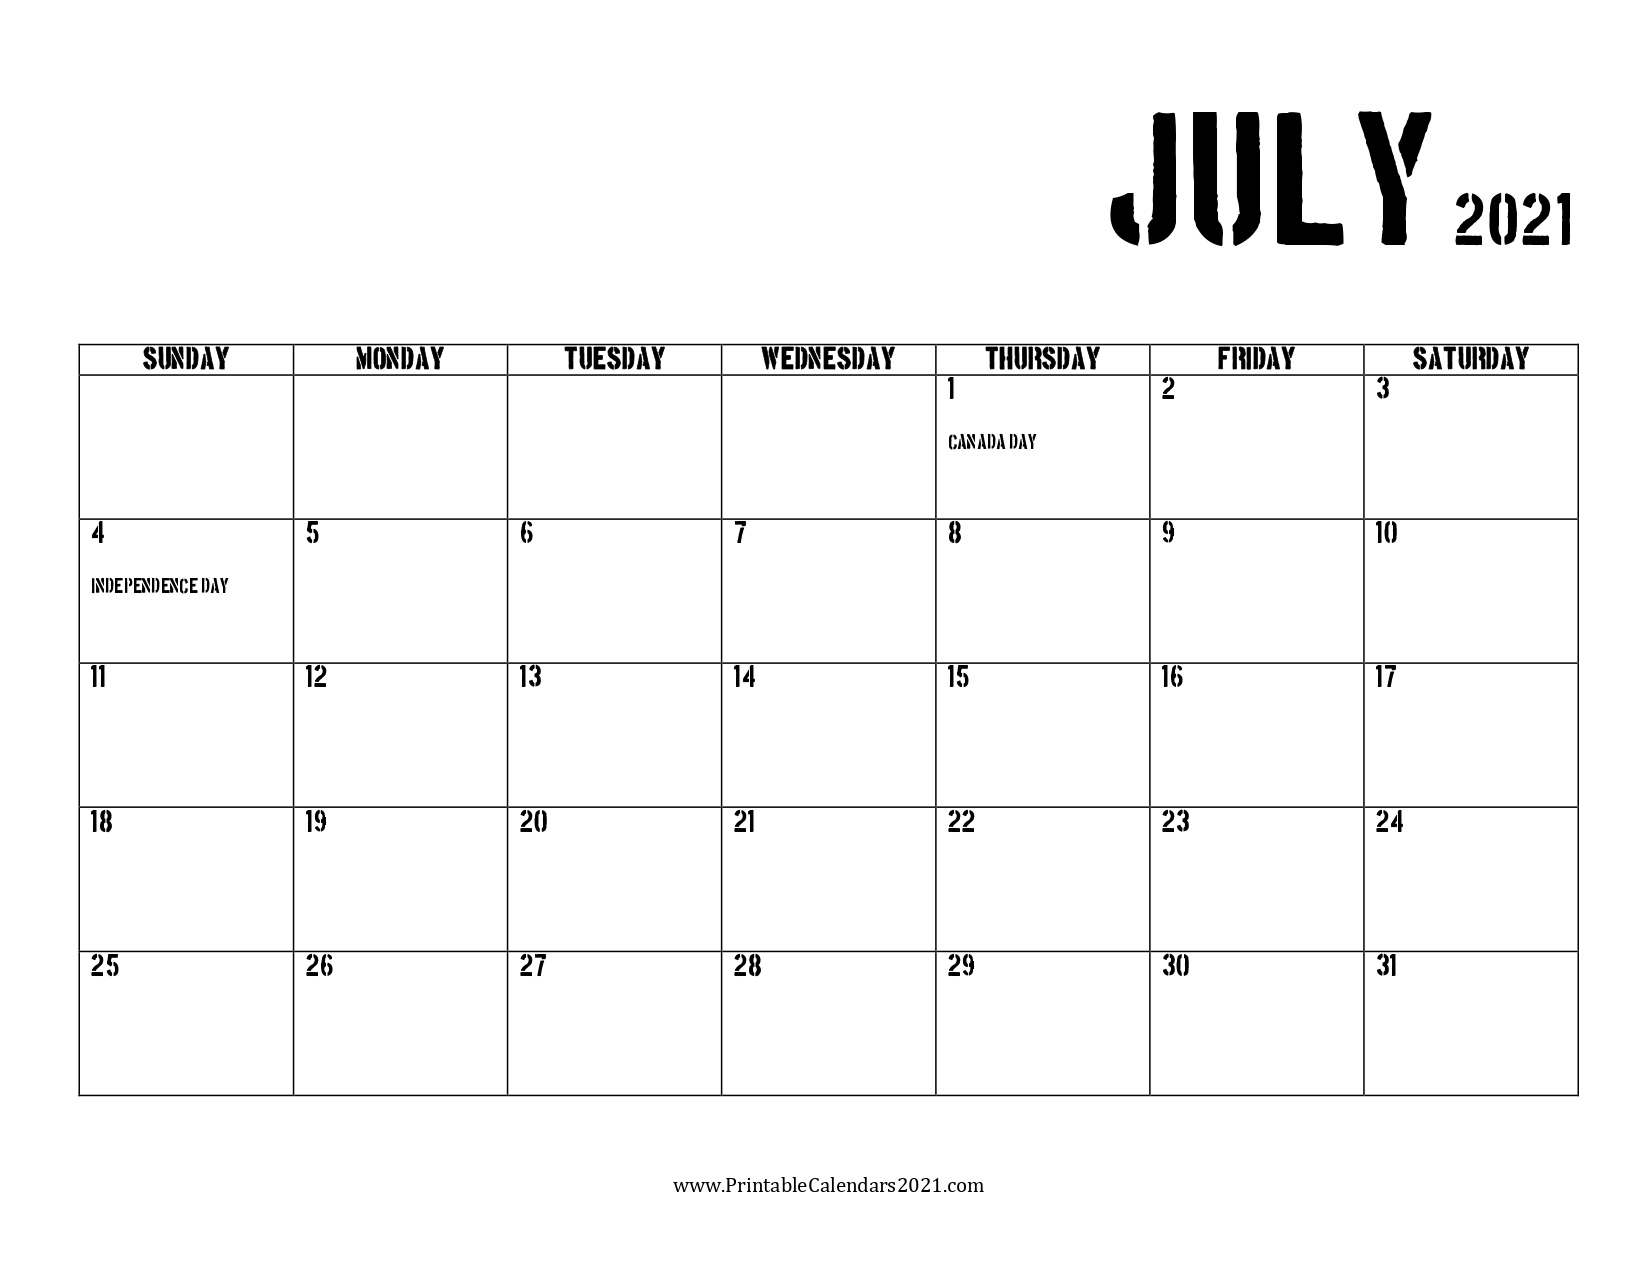 45+ July 2021 Calendar Printable, July 2021 Calendar Pdf, Blank, Free Www.wiki-Calendar.com July 2021